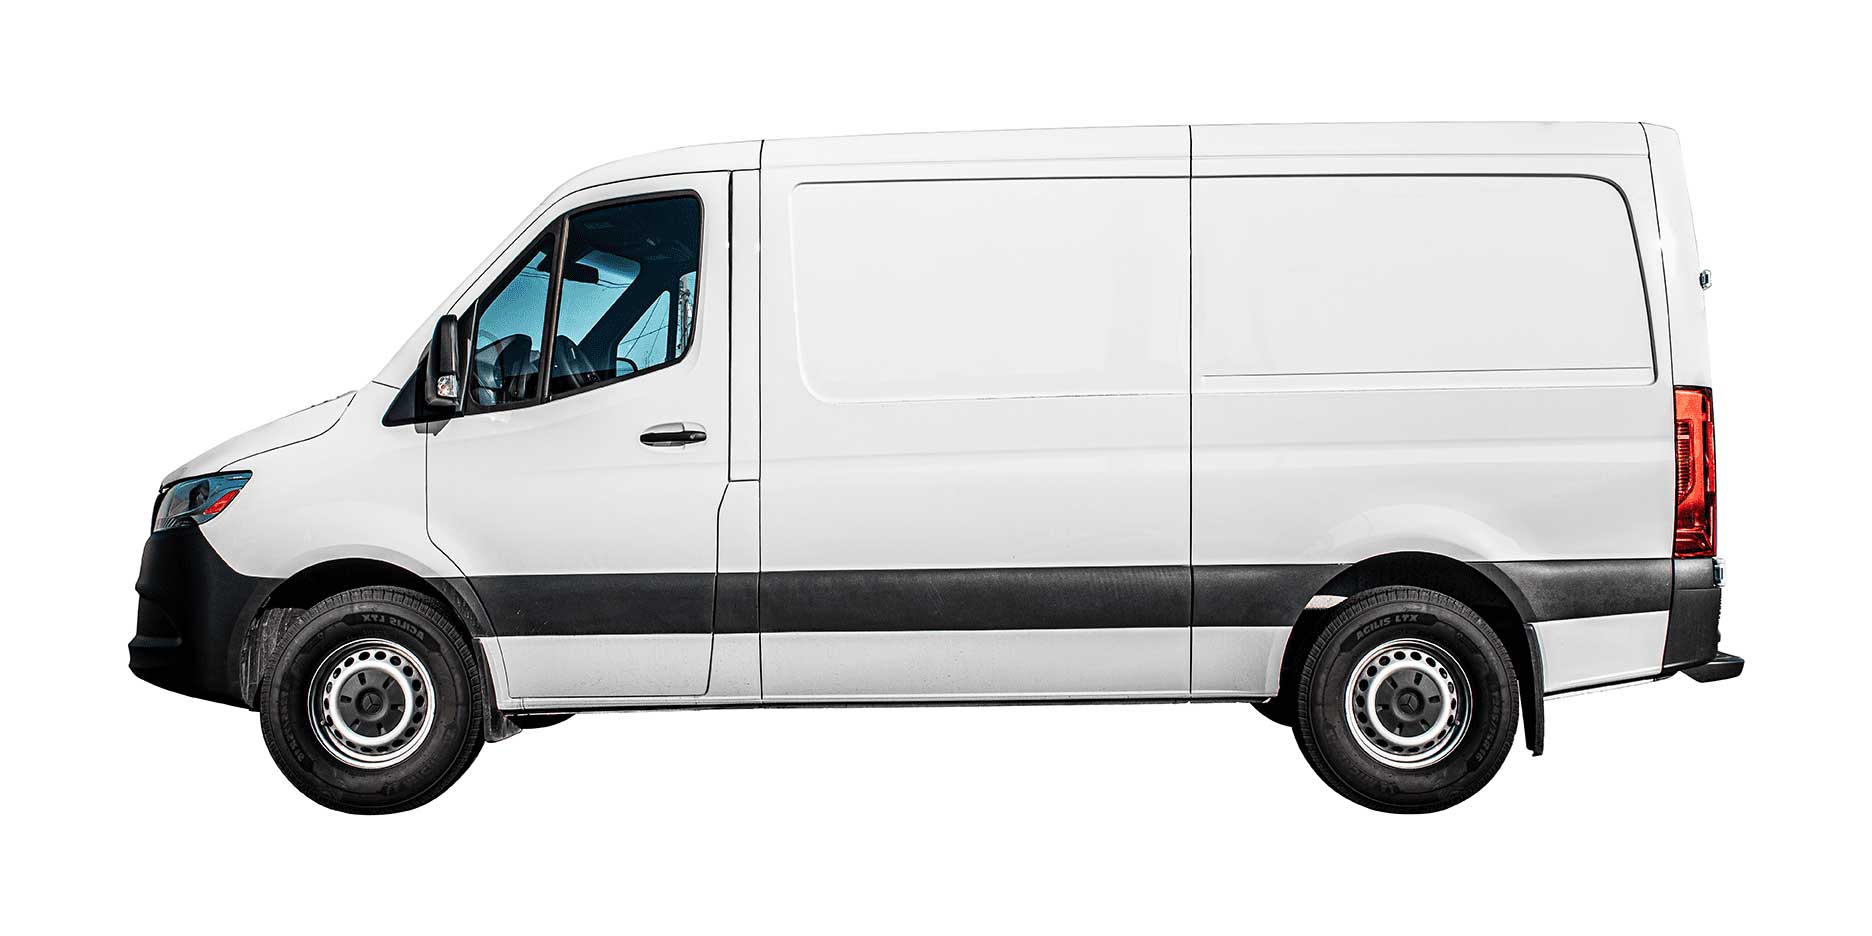 White van with no graphics